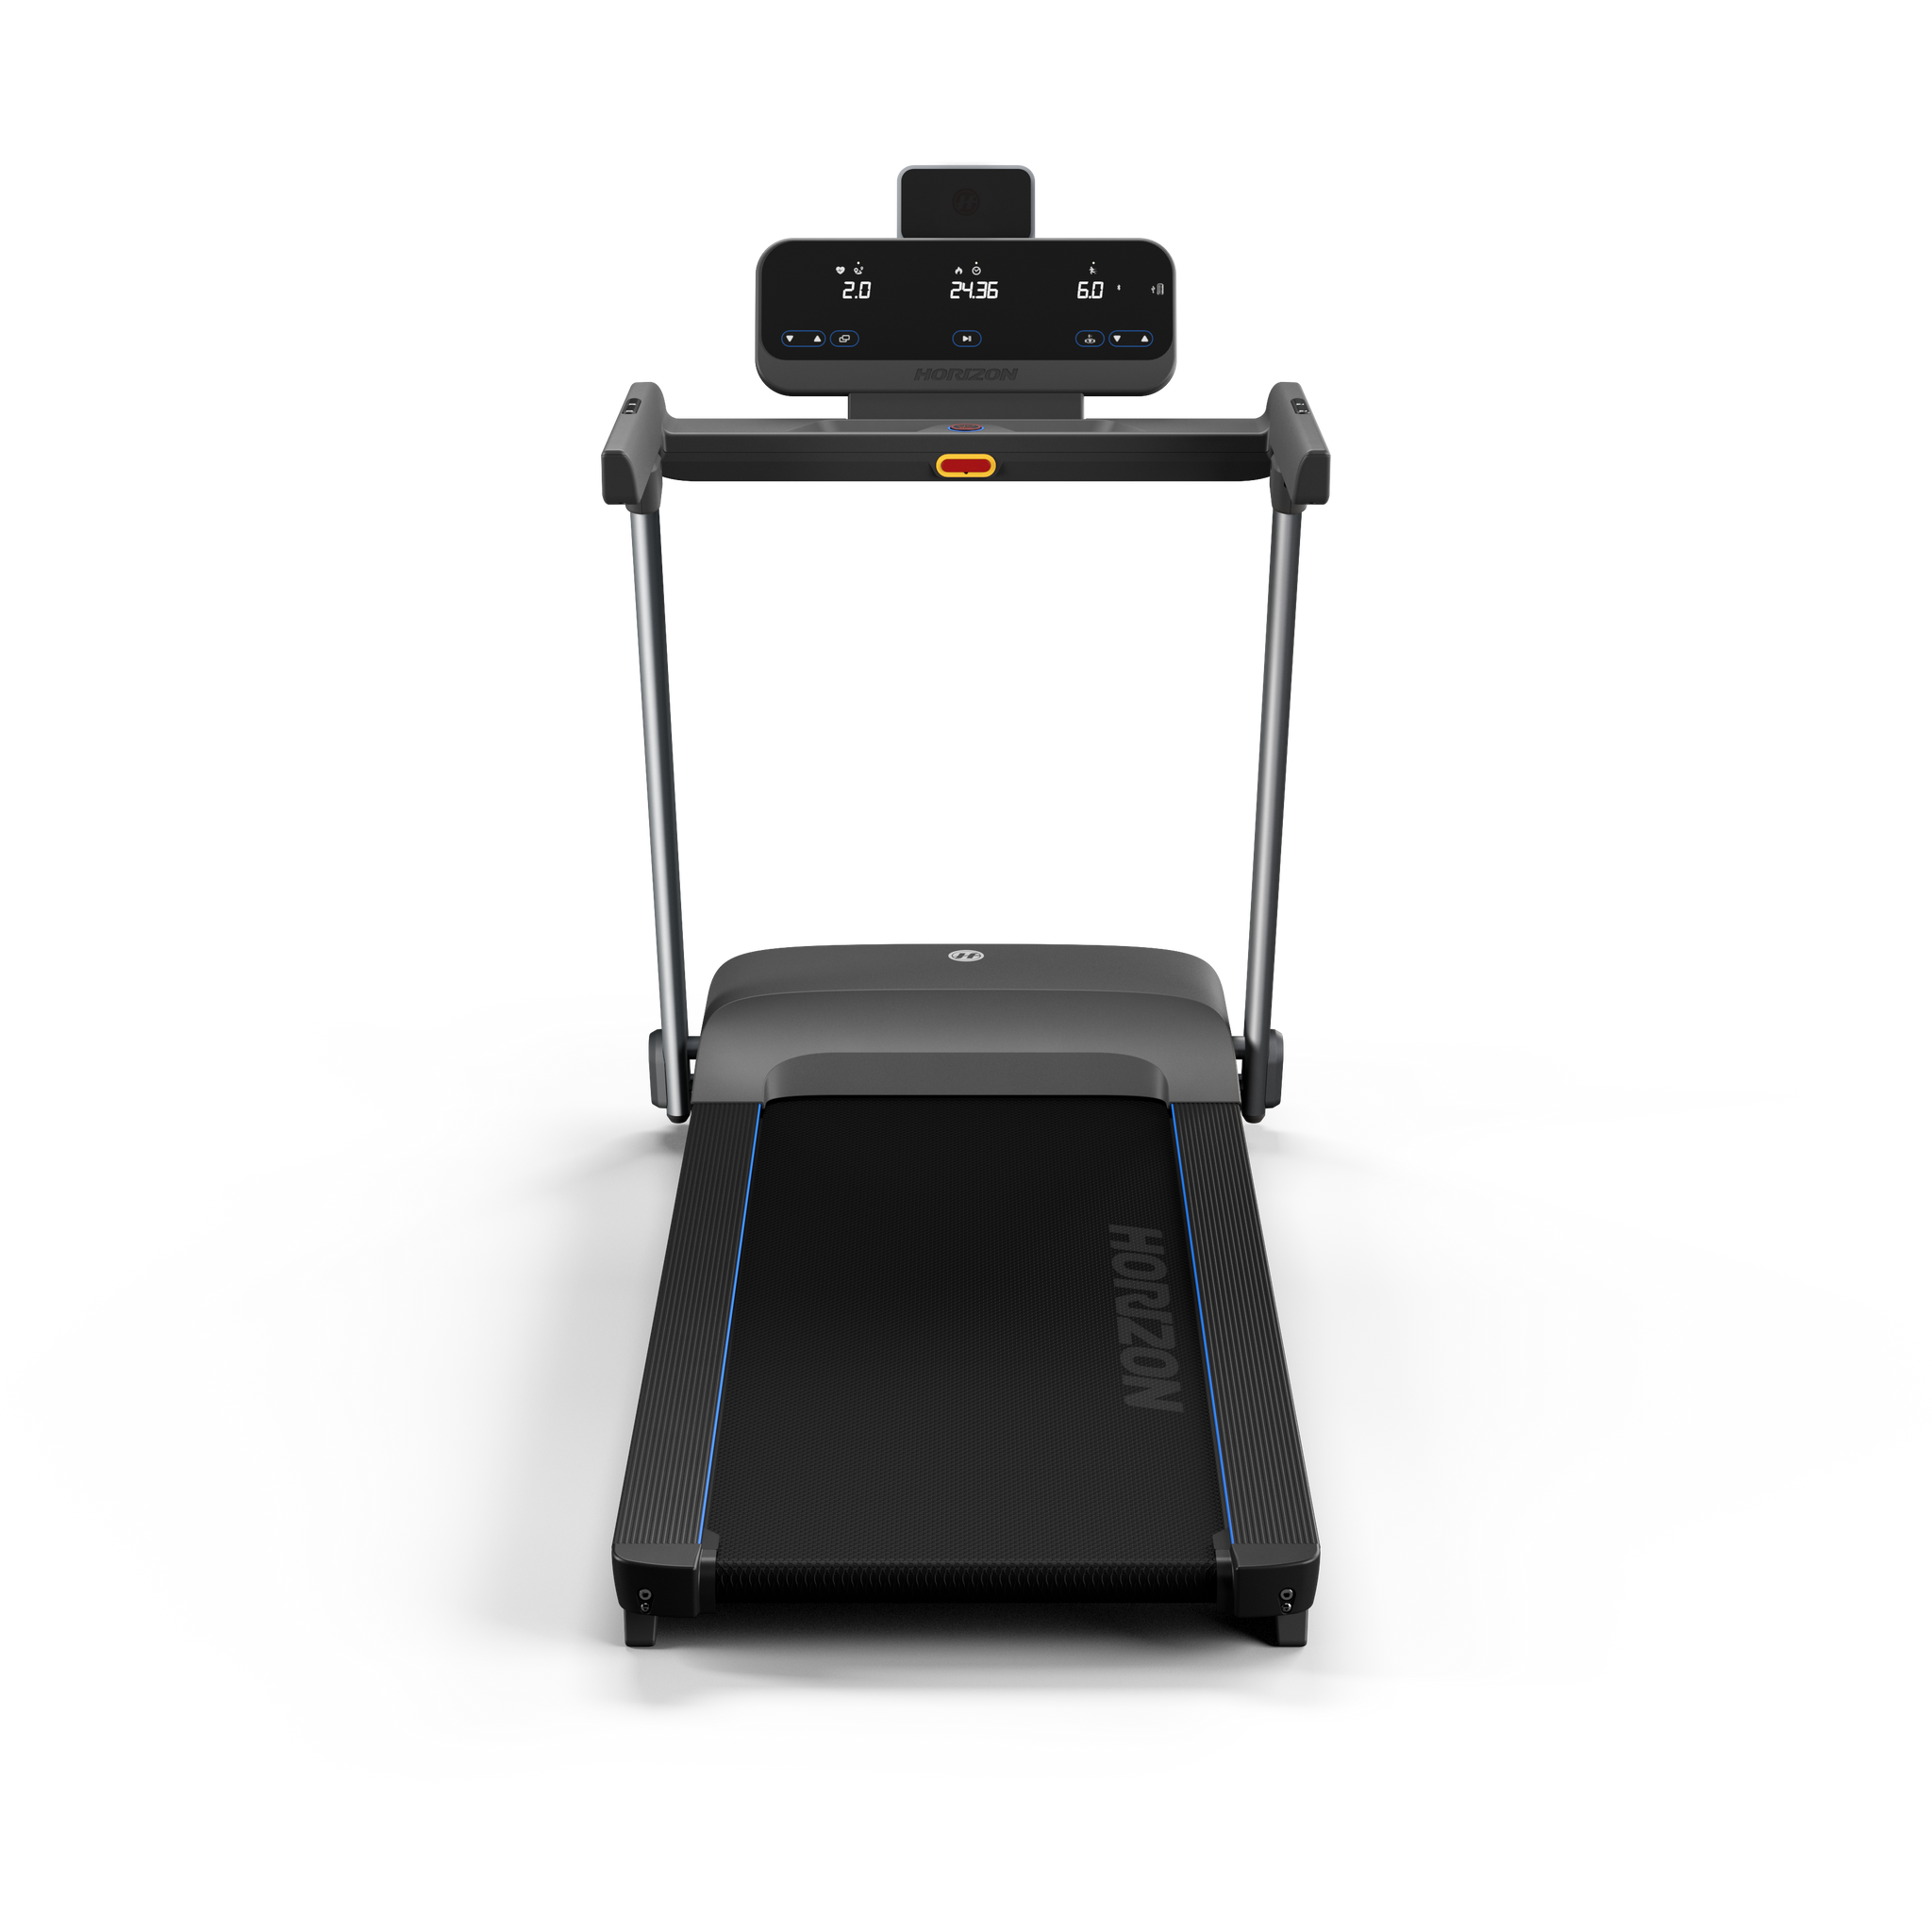 Horizon Evolve 3.0 Treadmill - Fully Foldable - uk.johnsonfitness.com